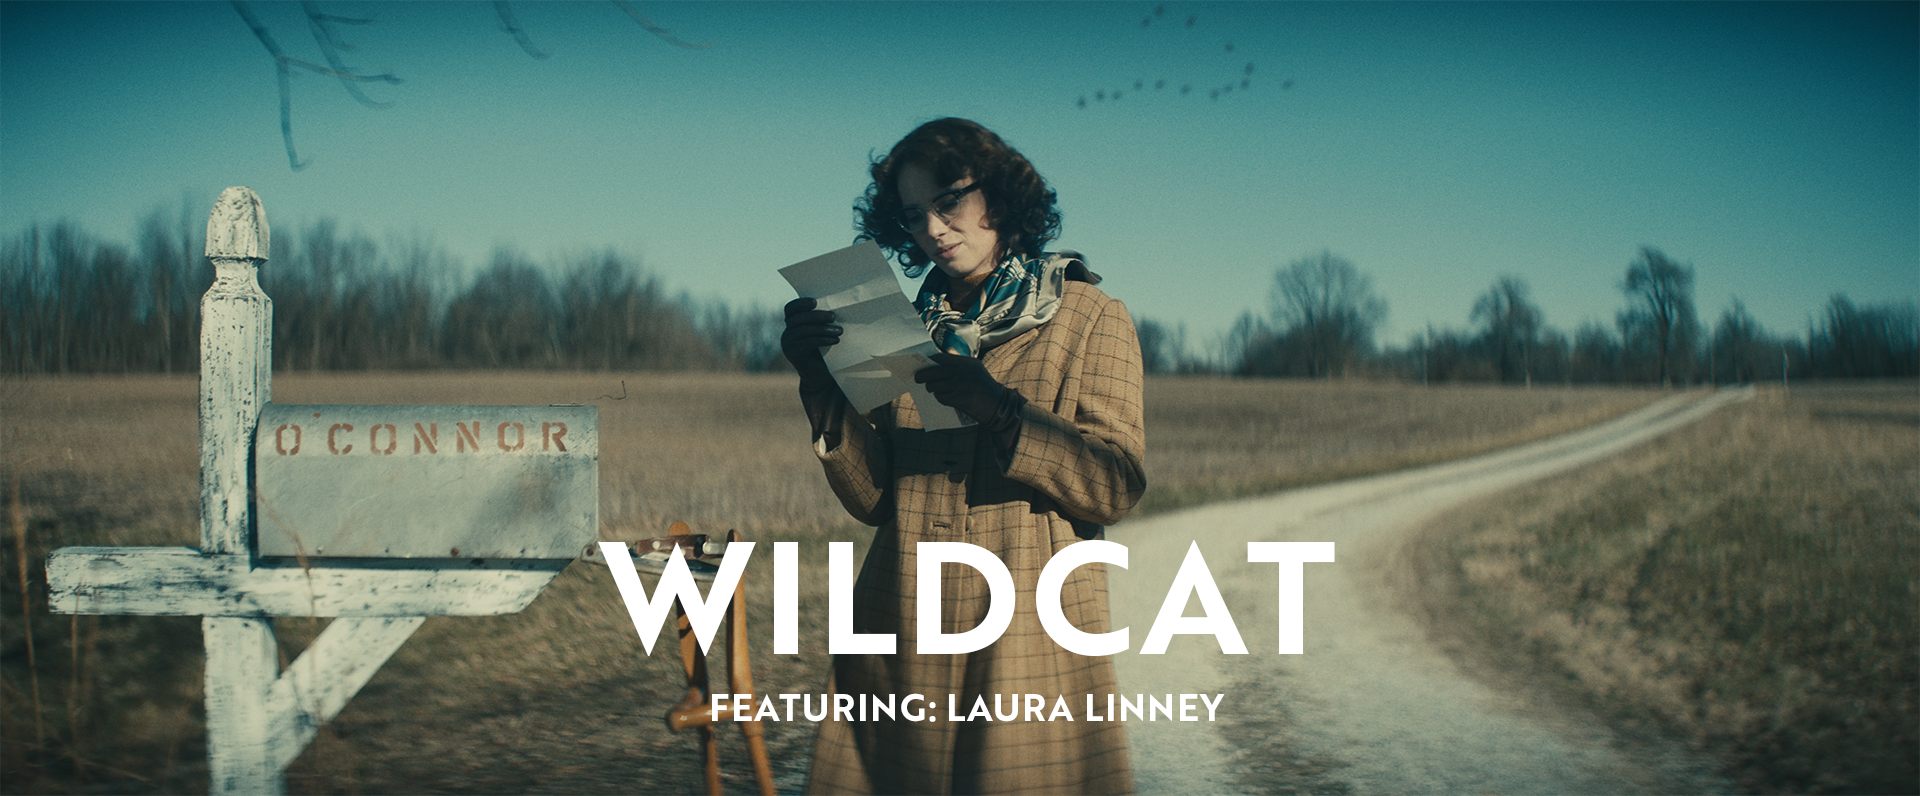 Wildcat and Laura Linney